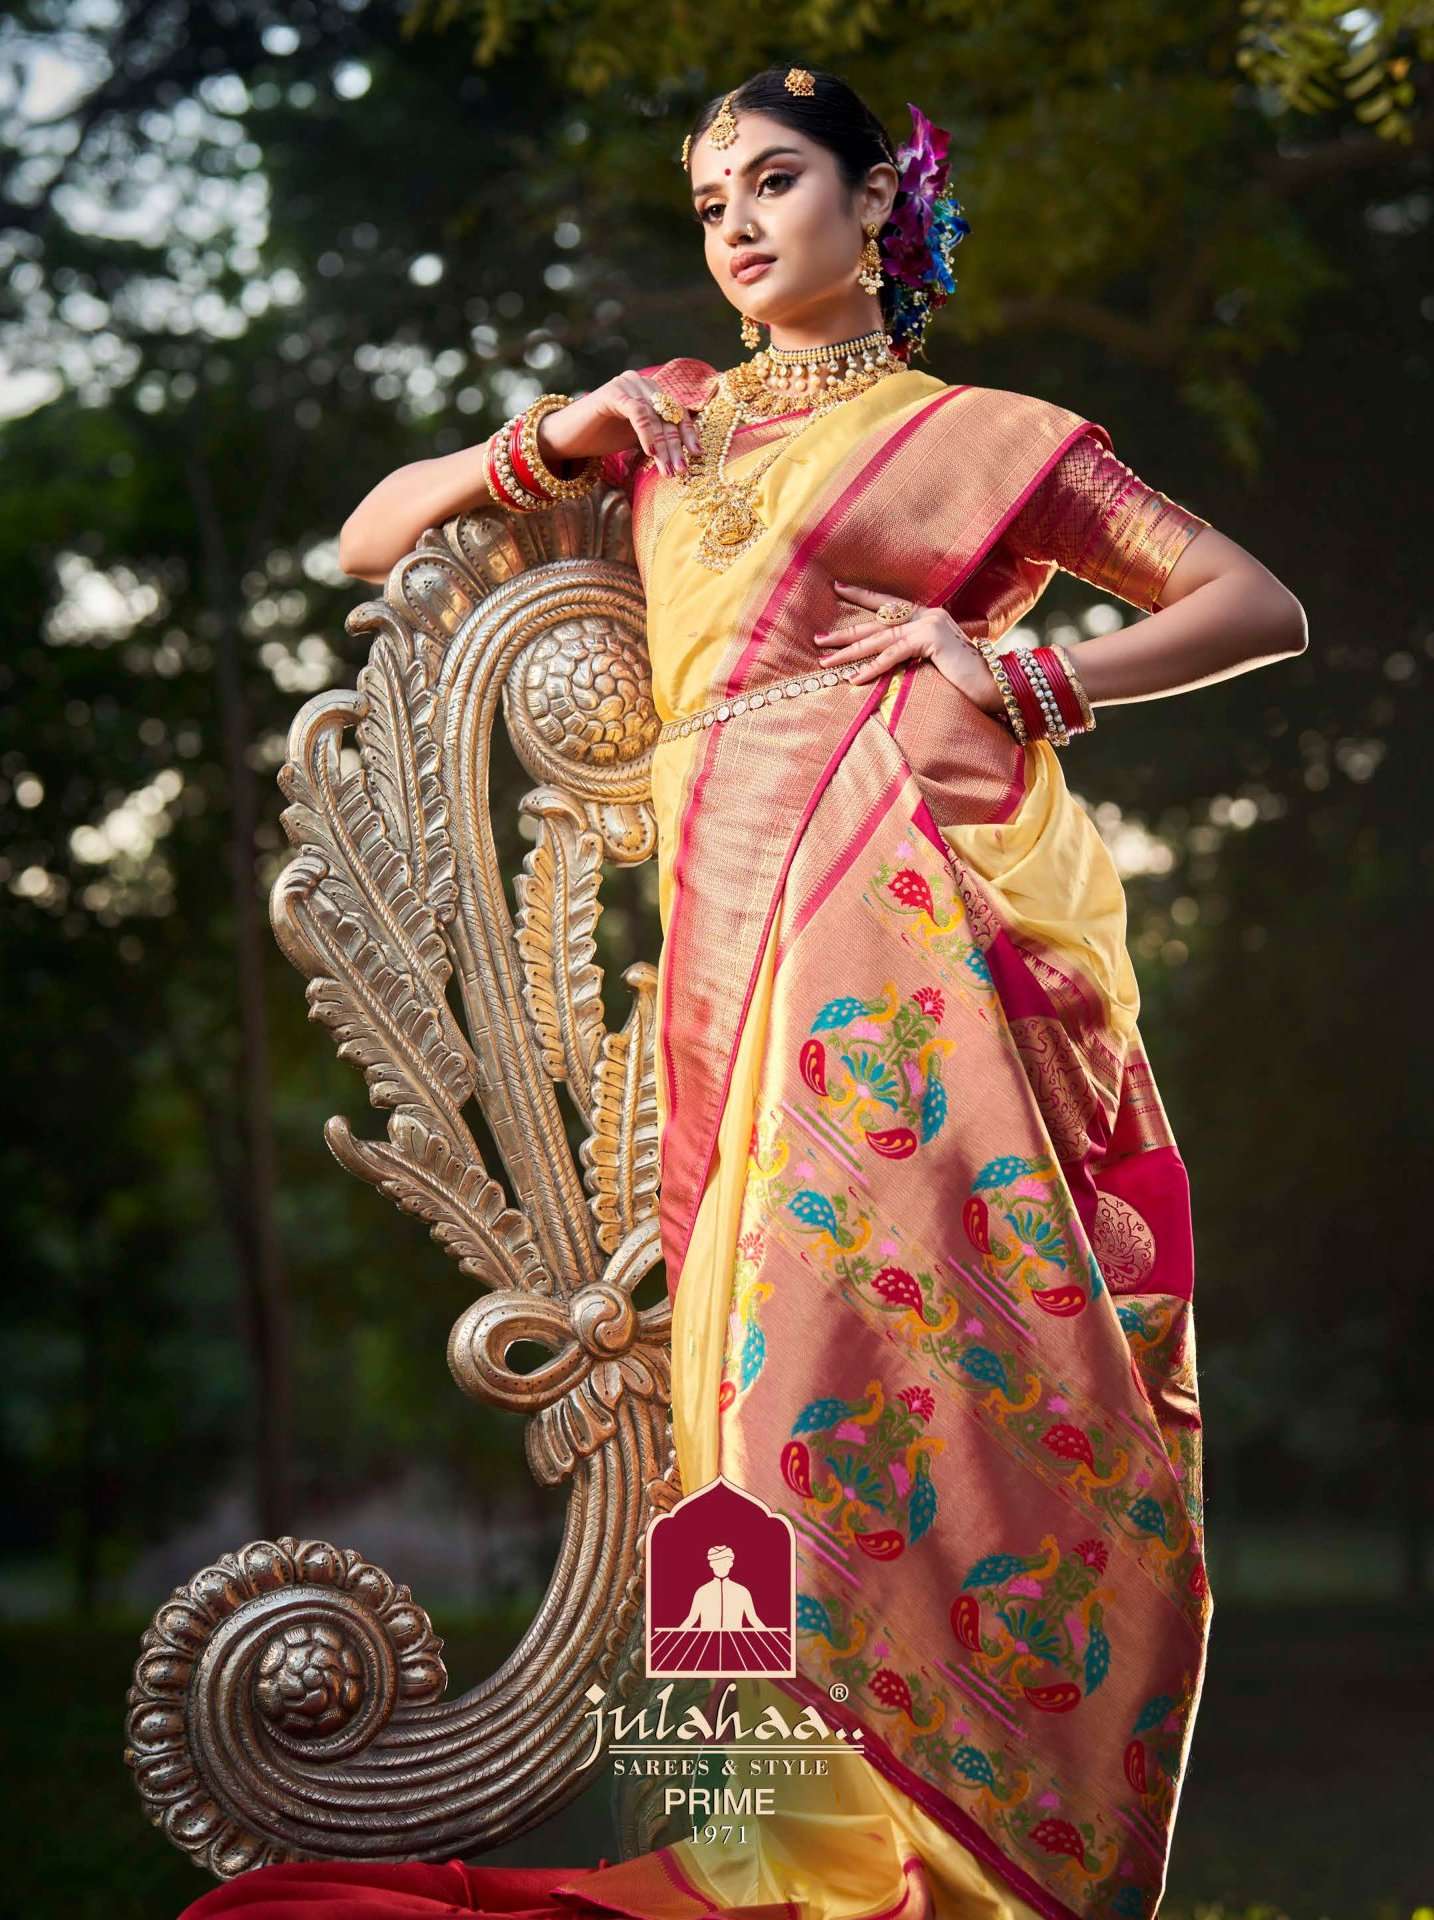 julahaa prime 1971 designs wedding wear silk paithani sarees collection